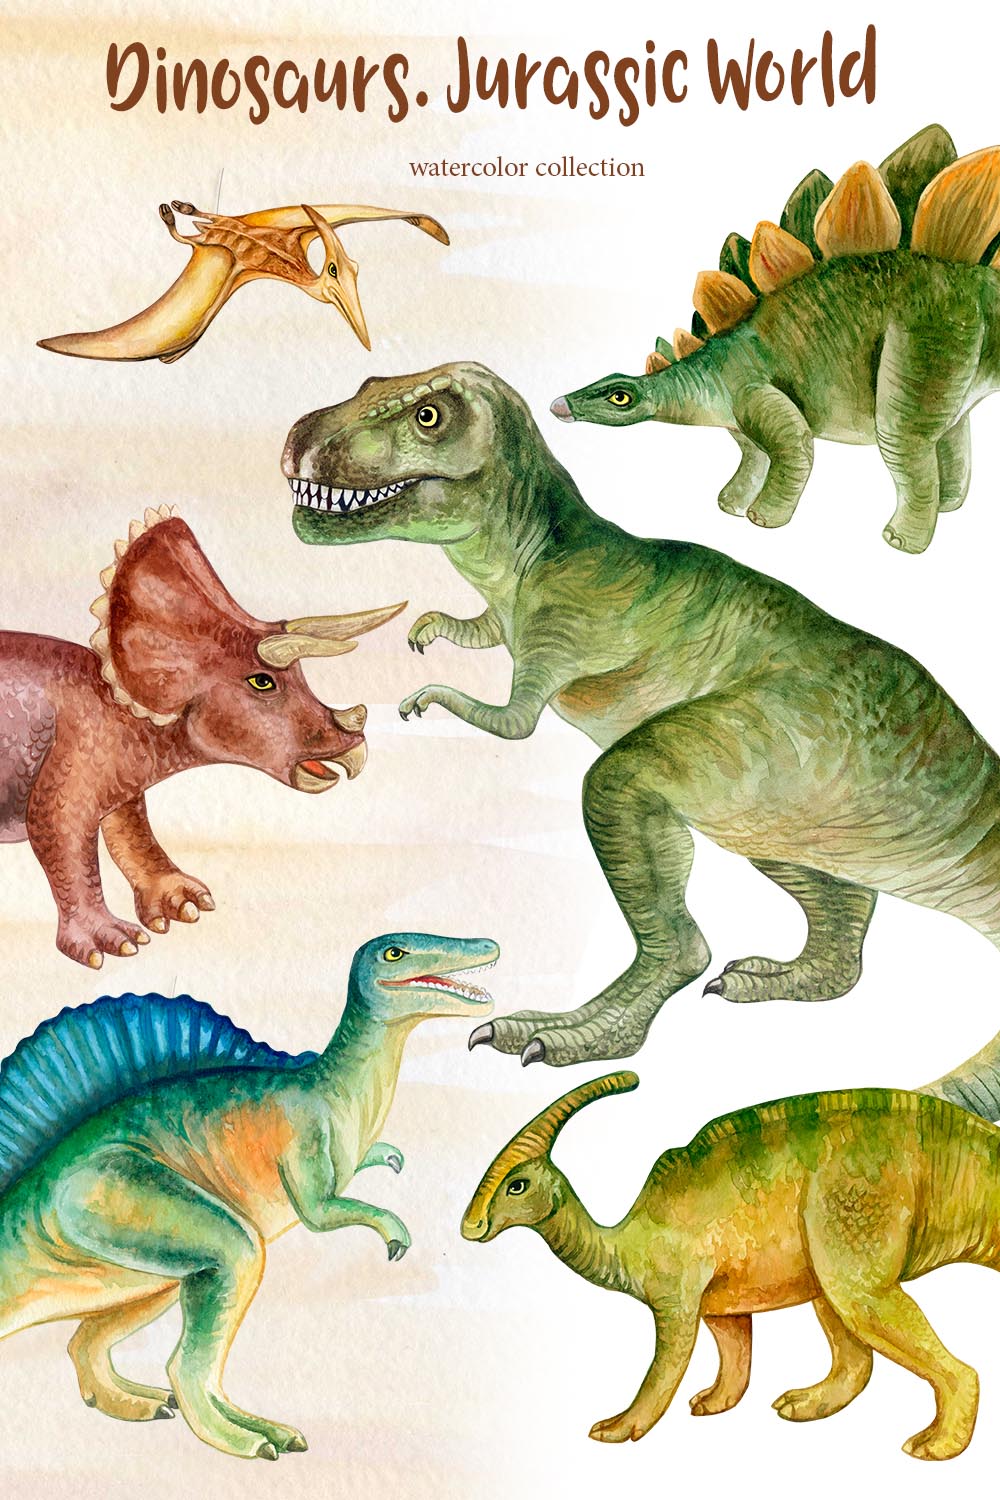 Dinosaurs Jurassic World Clipart pinterest image.